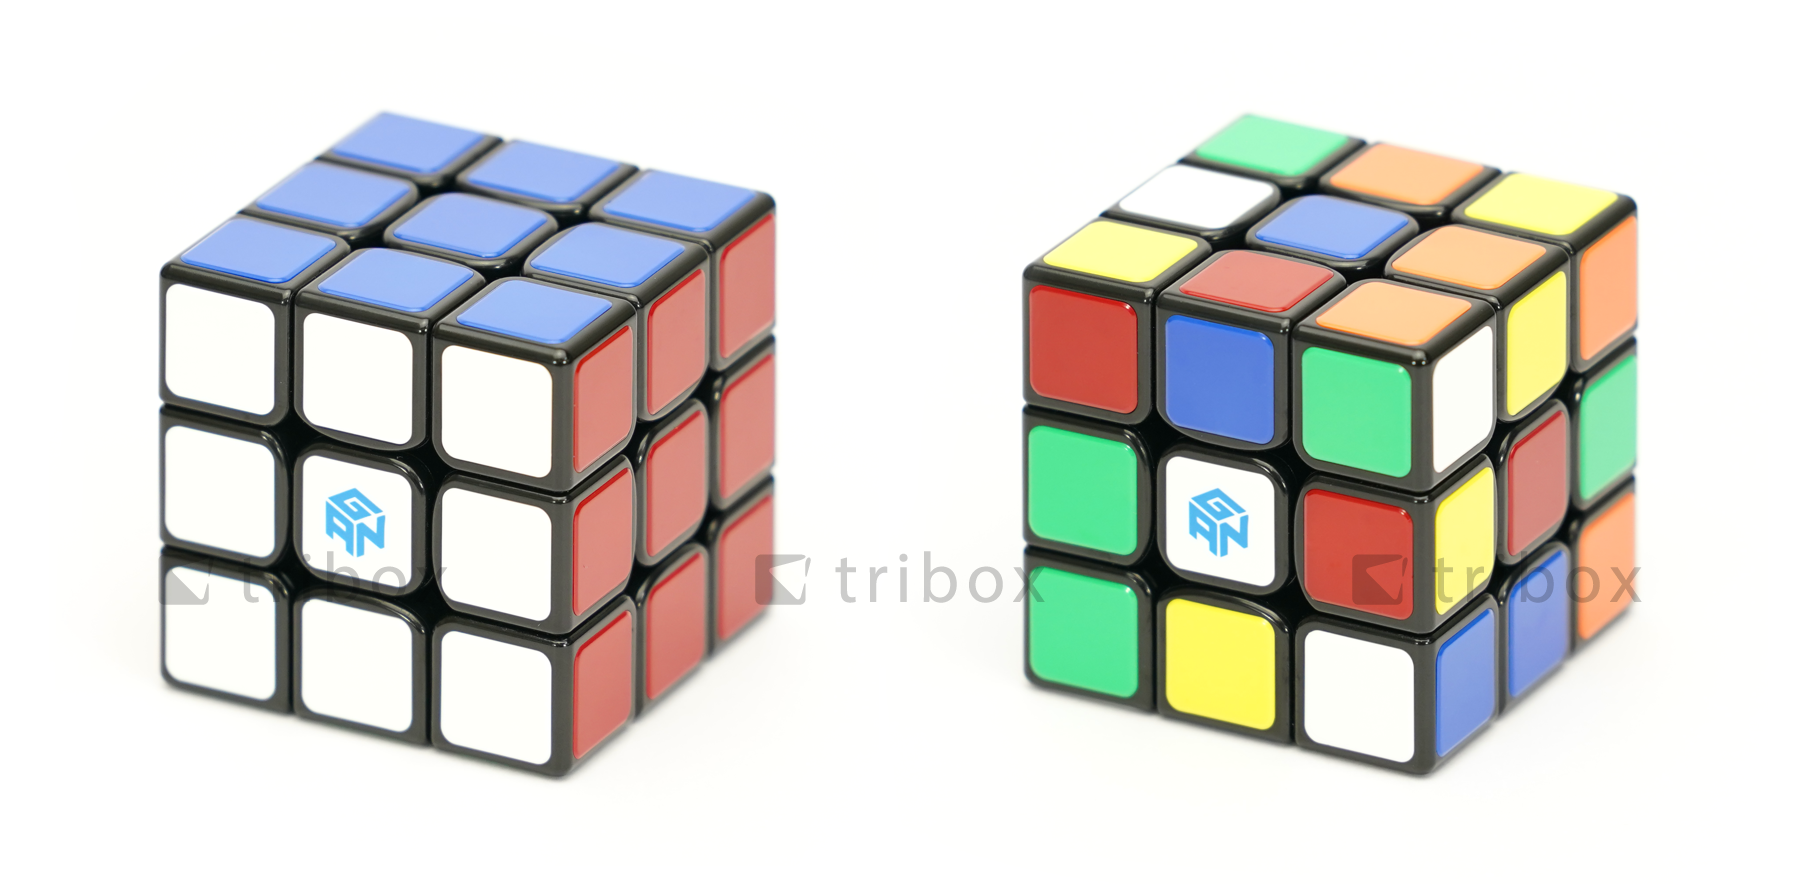 Toriboストア Gan Speed Cube Gsc 3x3x3